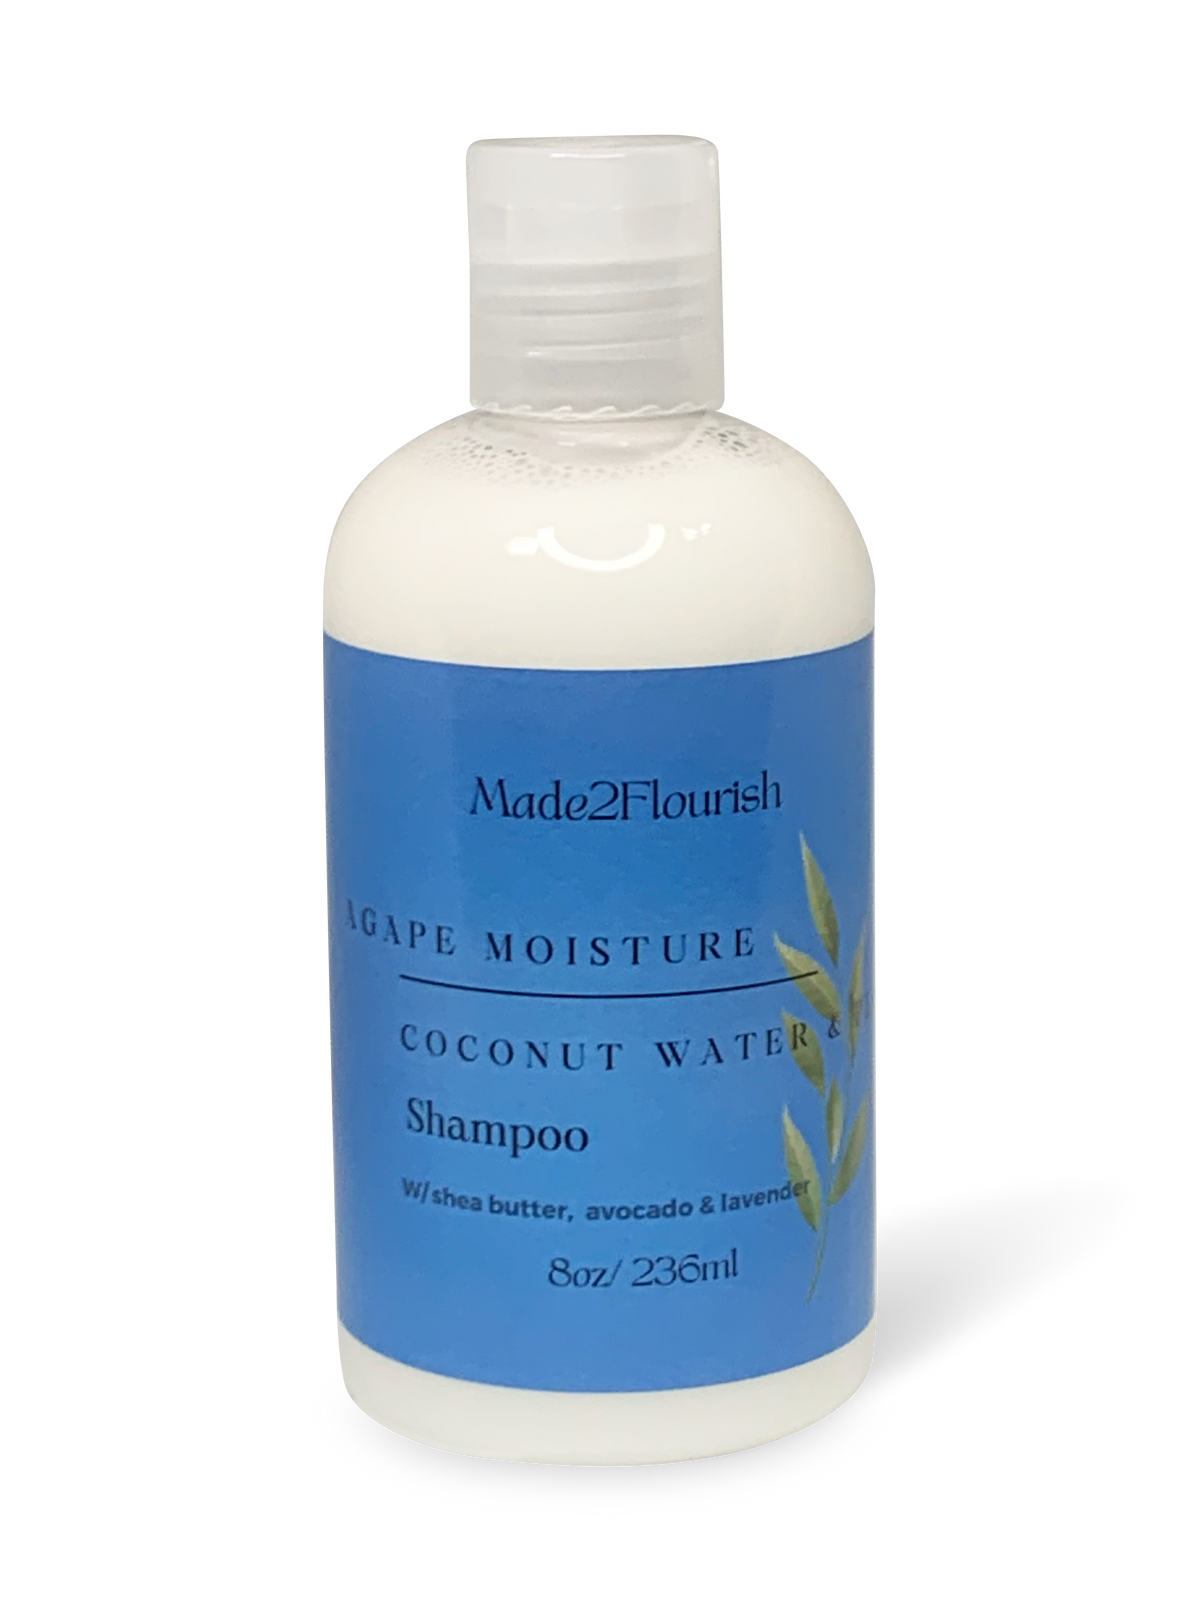 Agape Moisture, Coconut Water & Pear Shampoo